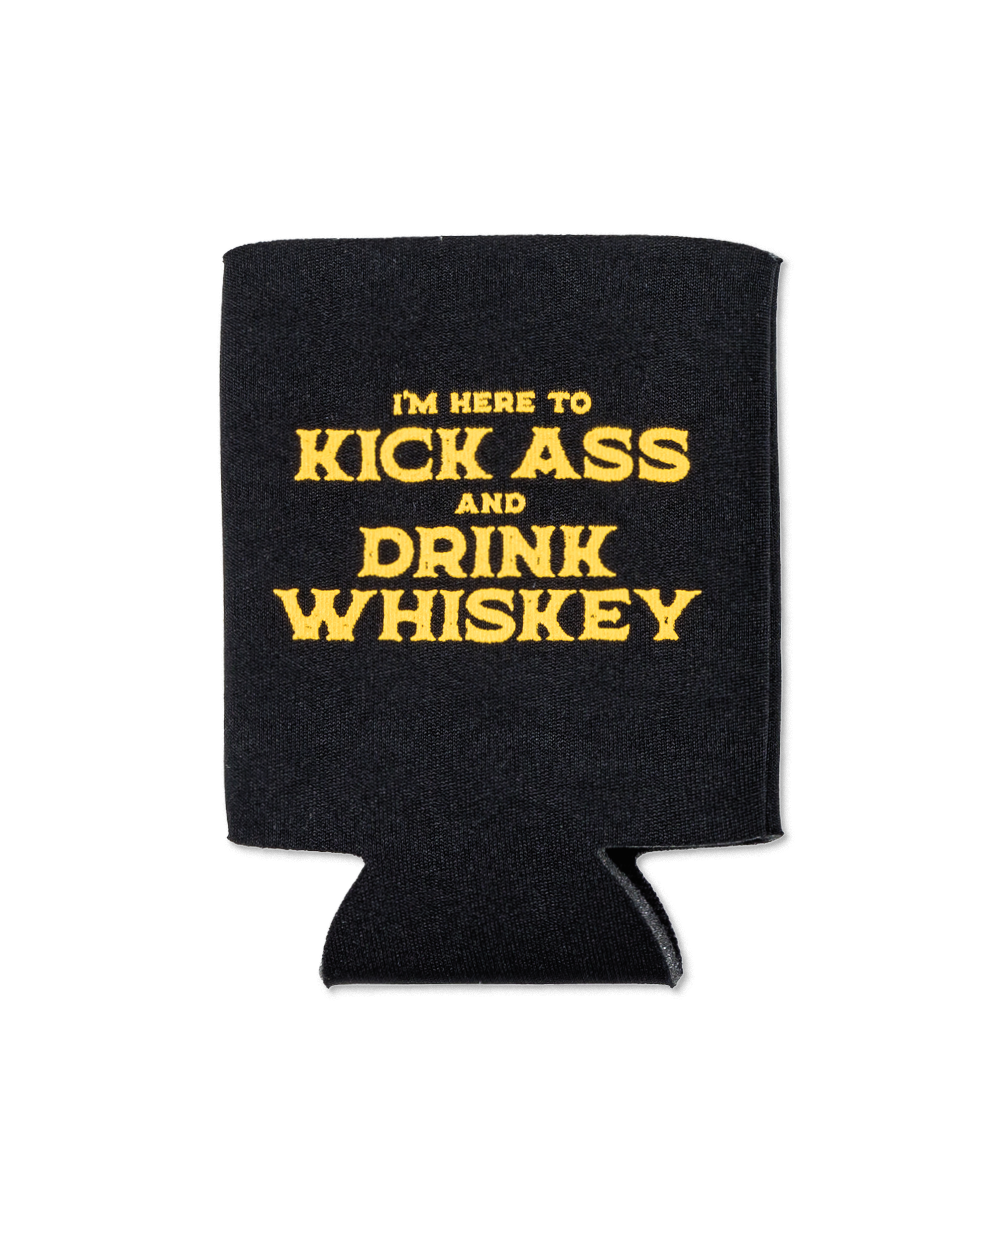 Kick Ass & Drink Whiskey Koozie